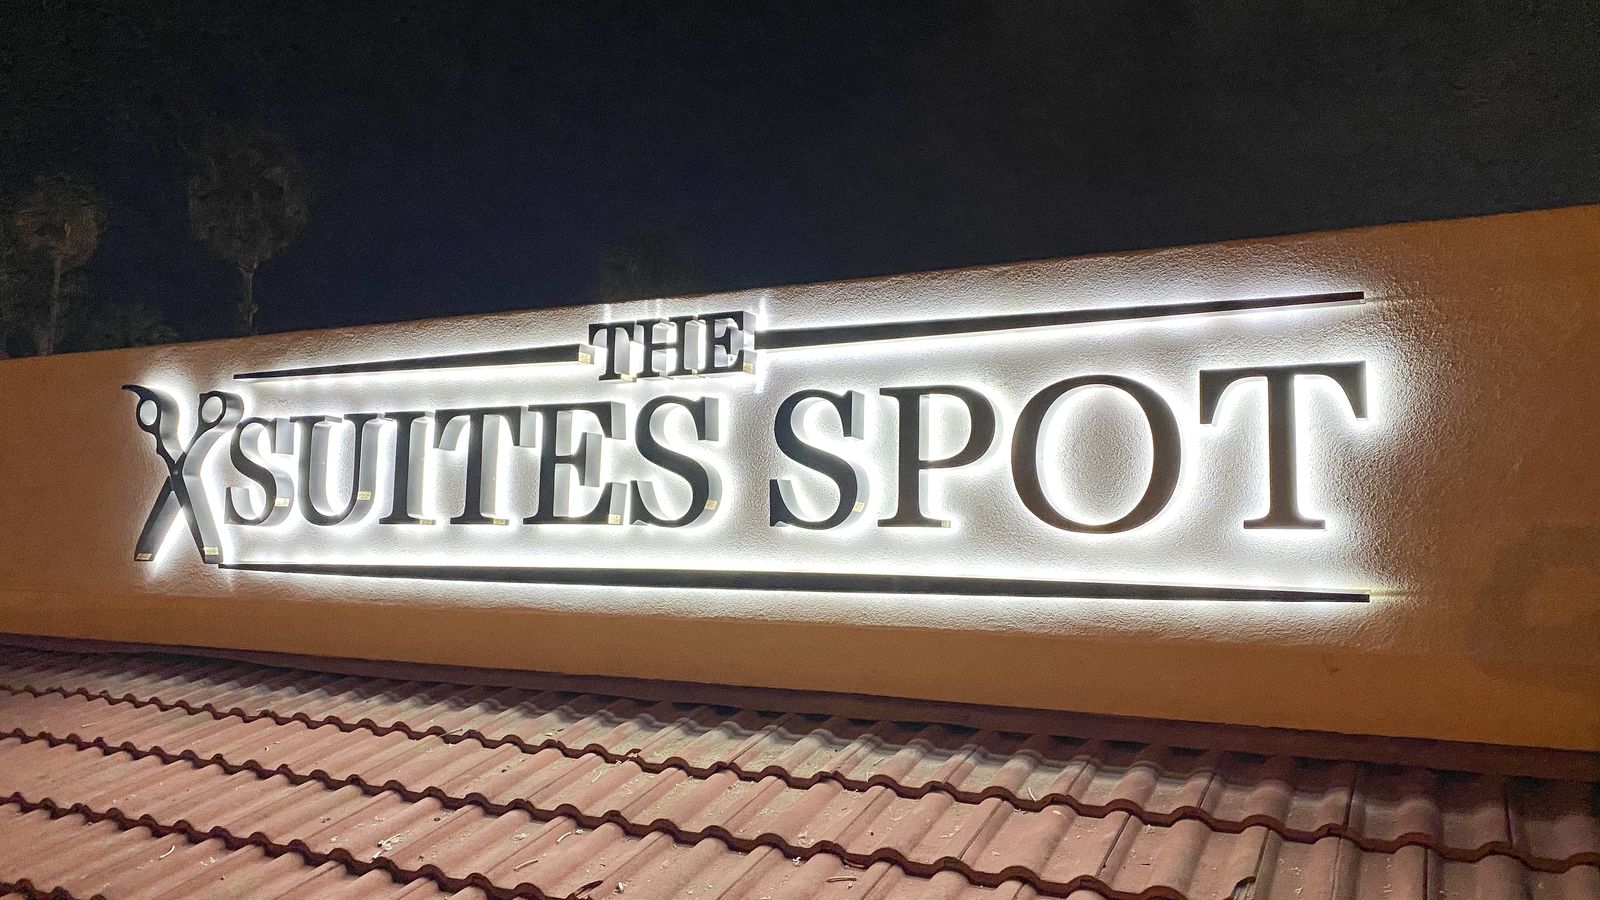 Suites Spot light-up sign